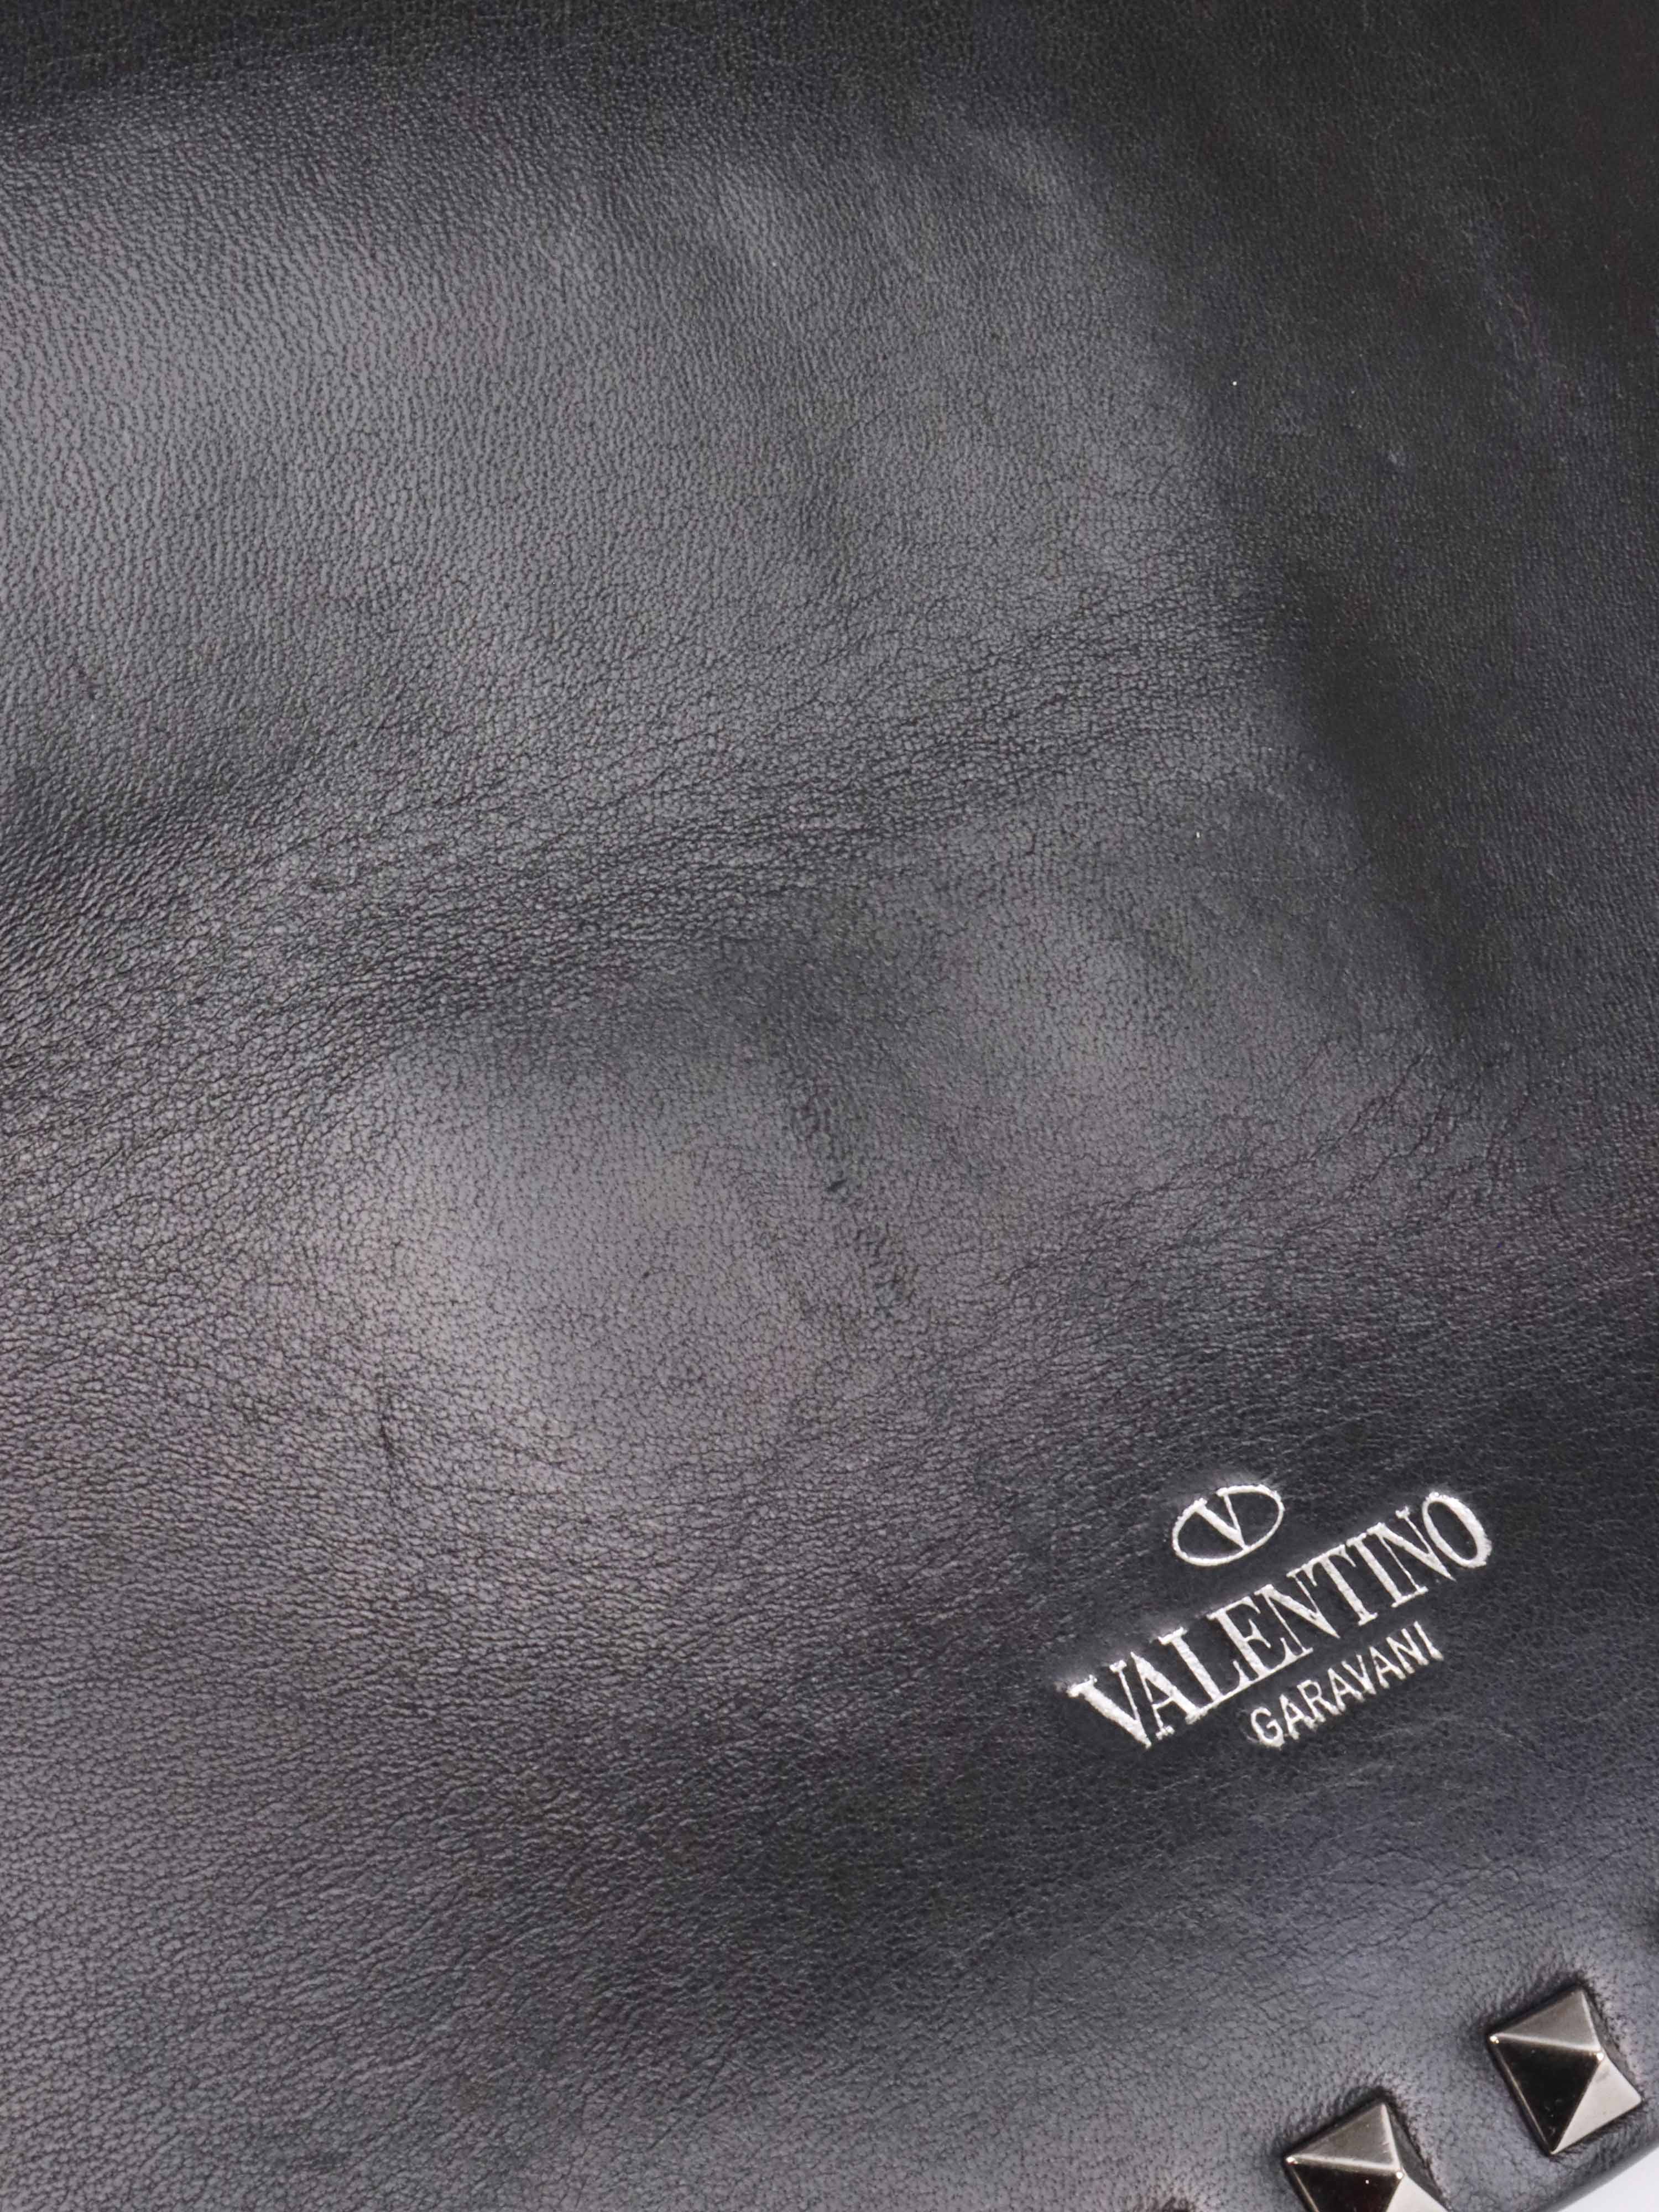 Valentino All Black Rockstuds Clutch